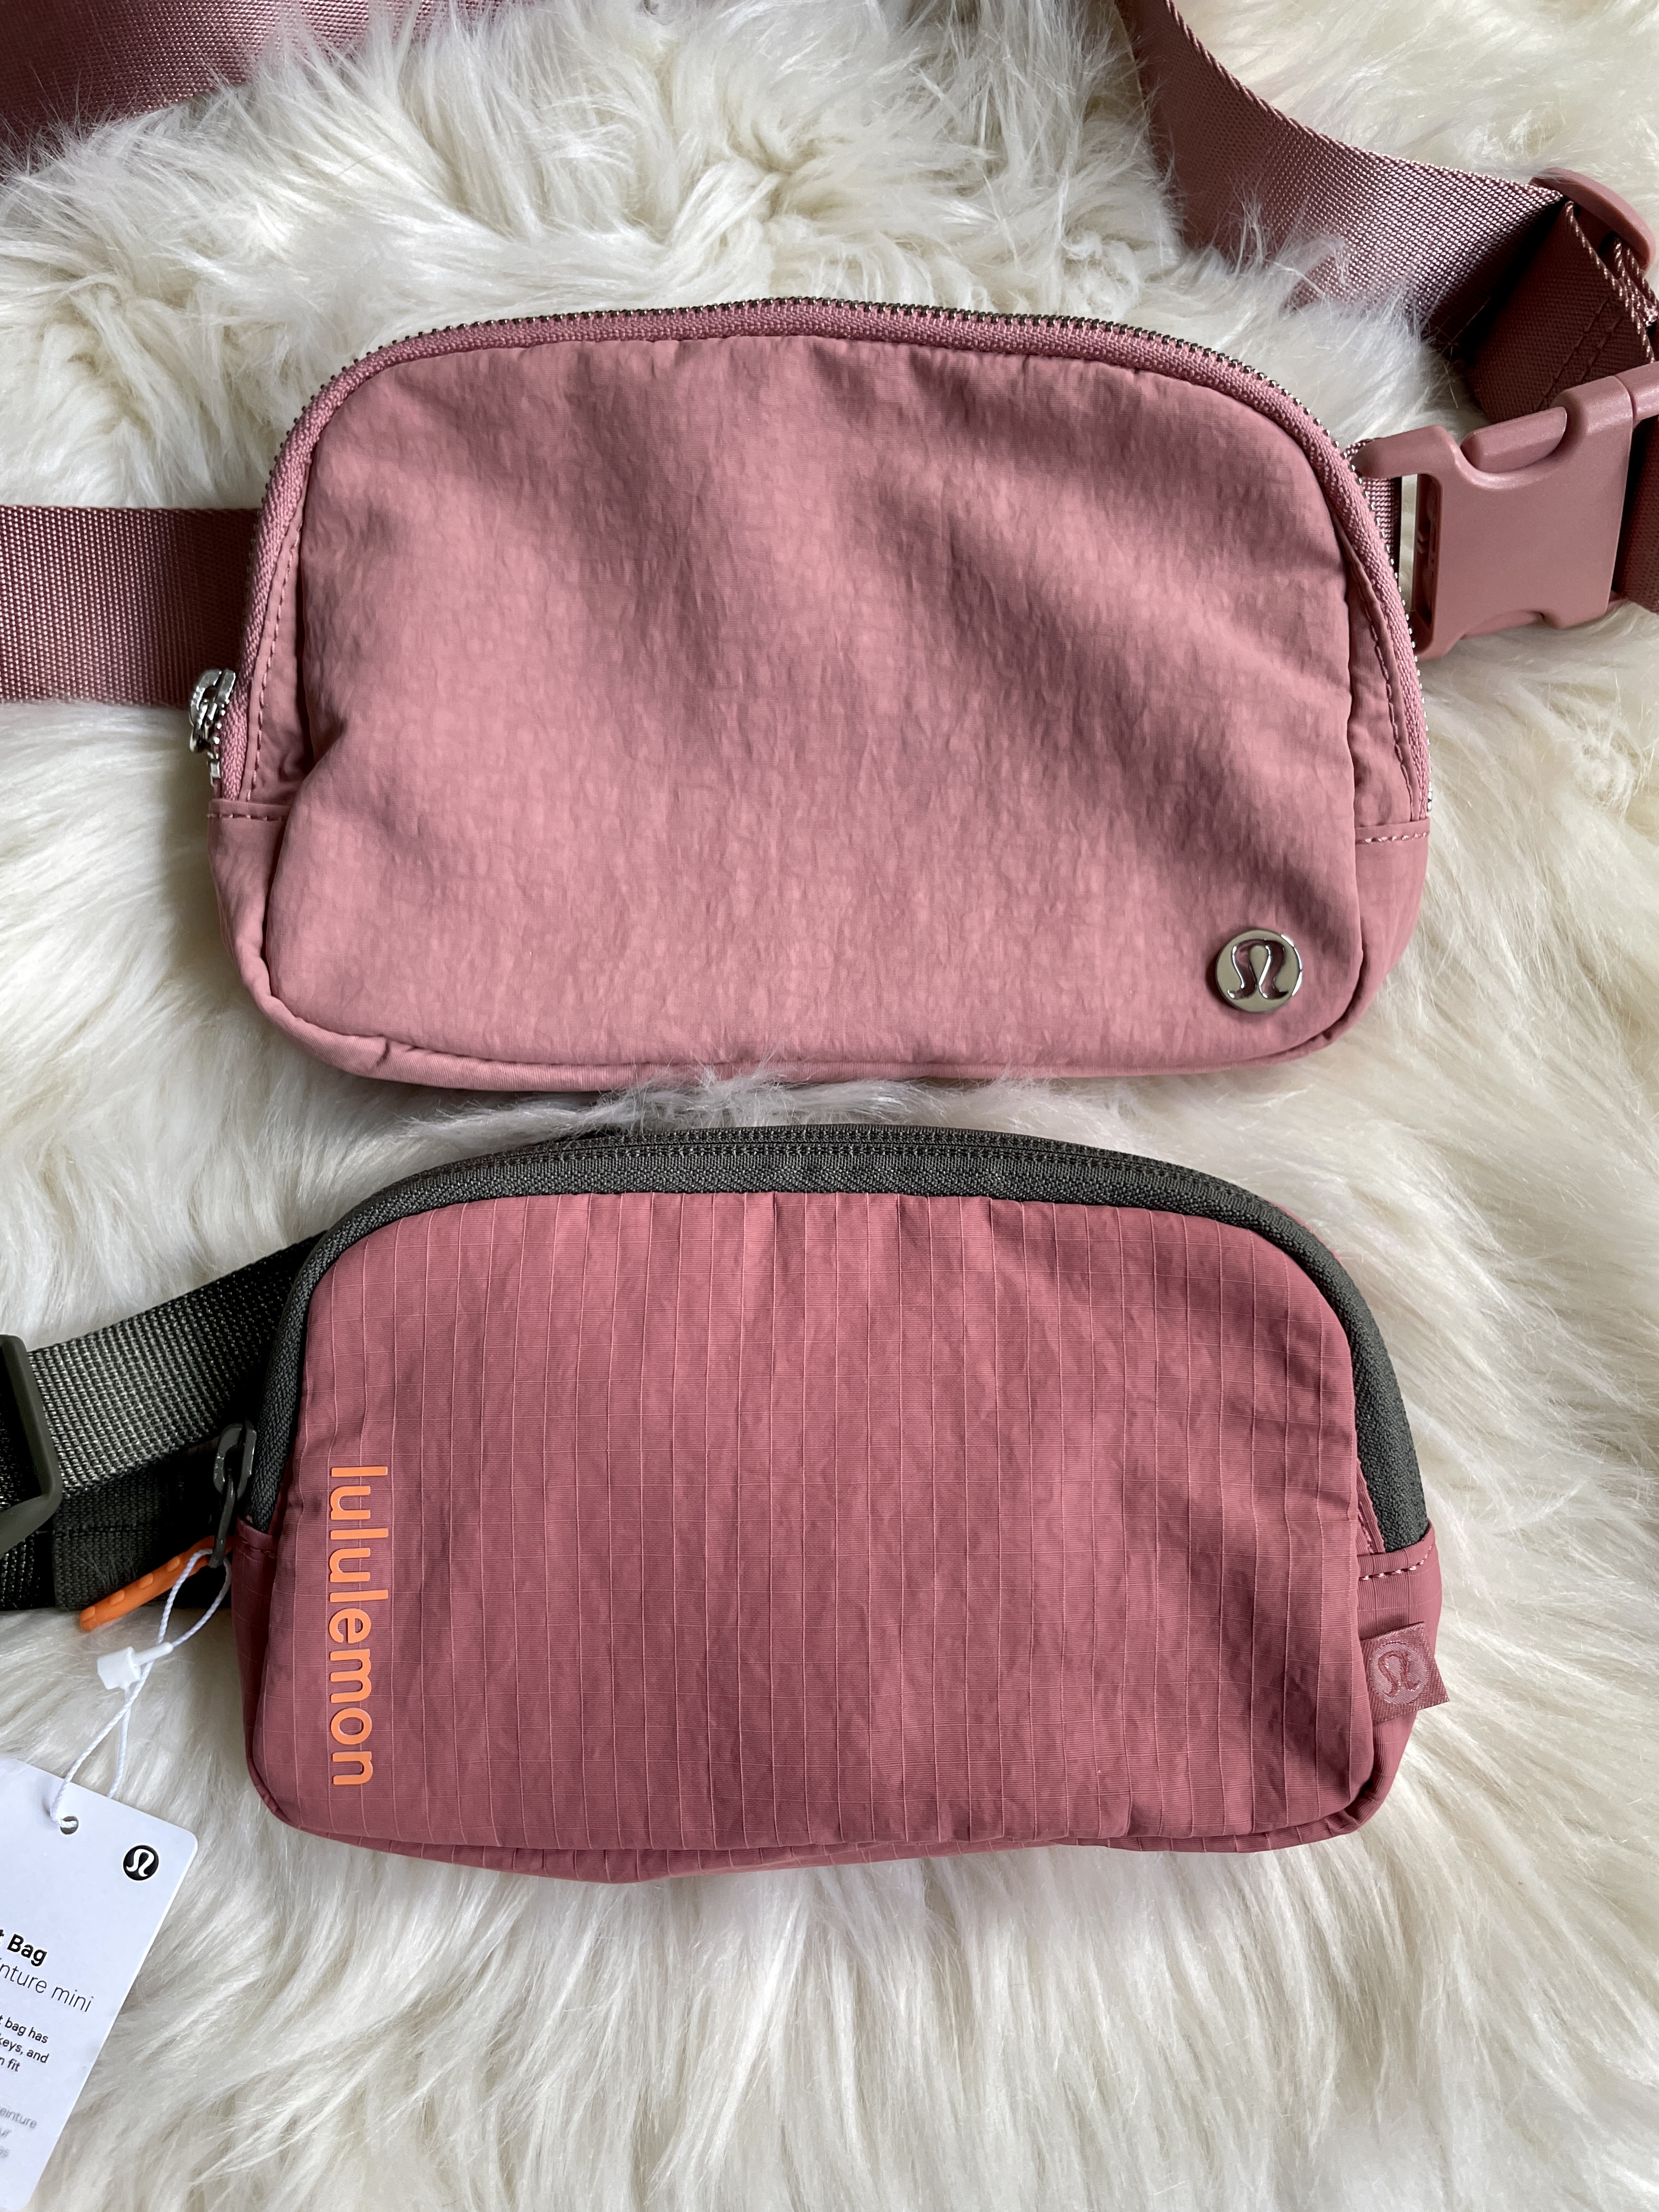 Lululemon Canada mini belt bag pink - Women's handbags